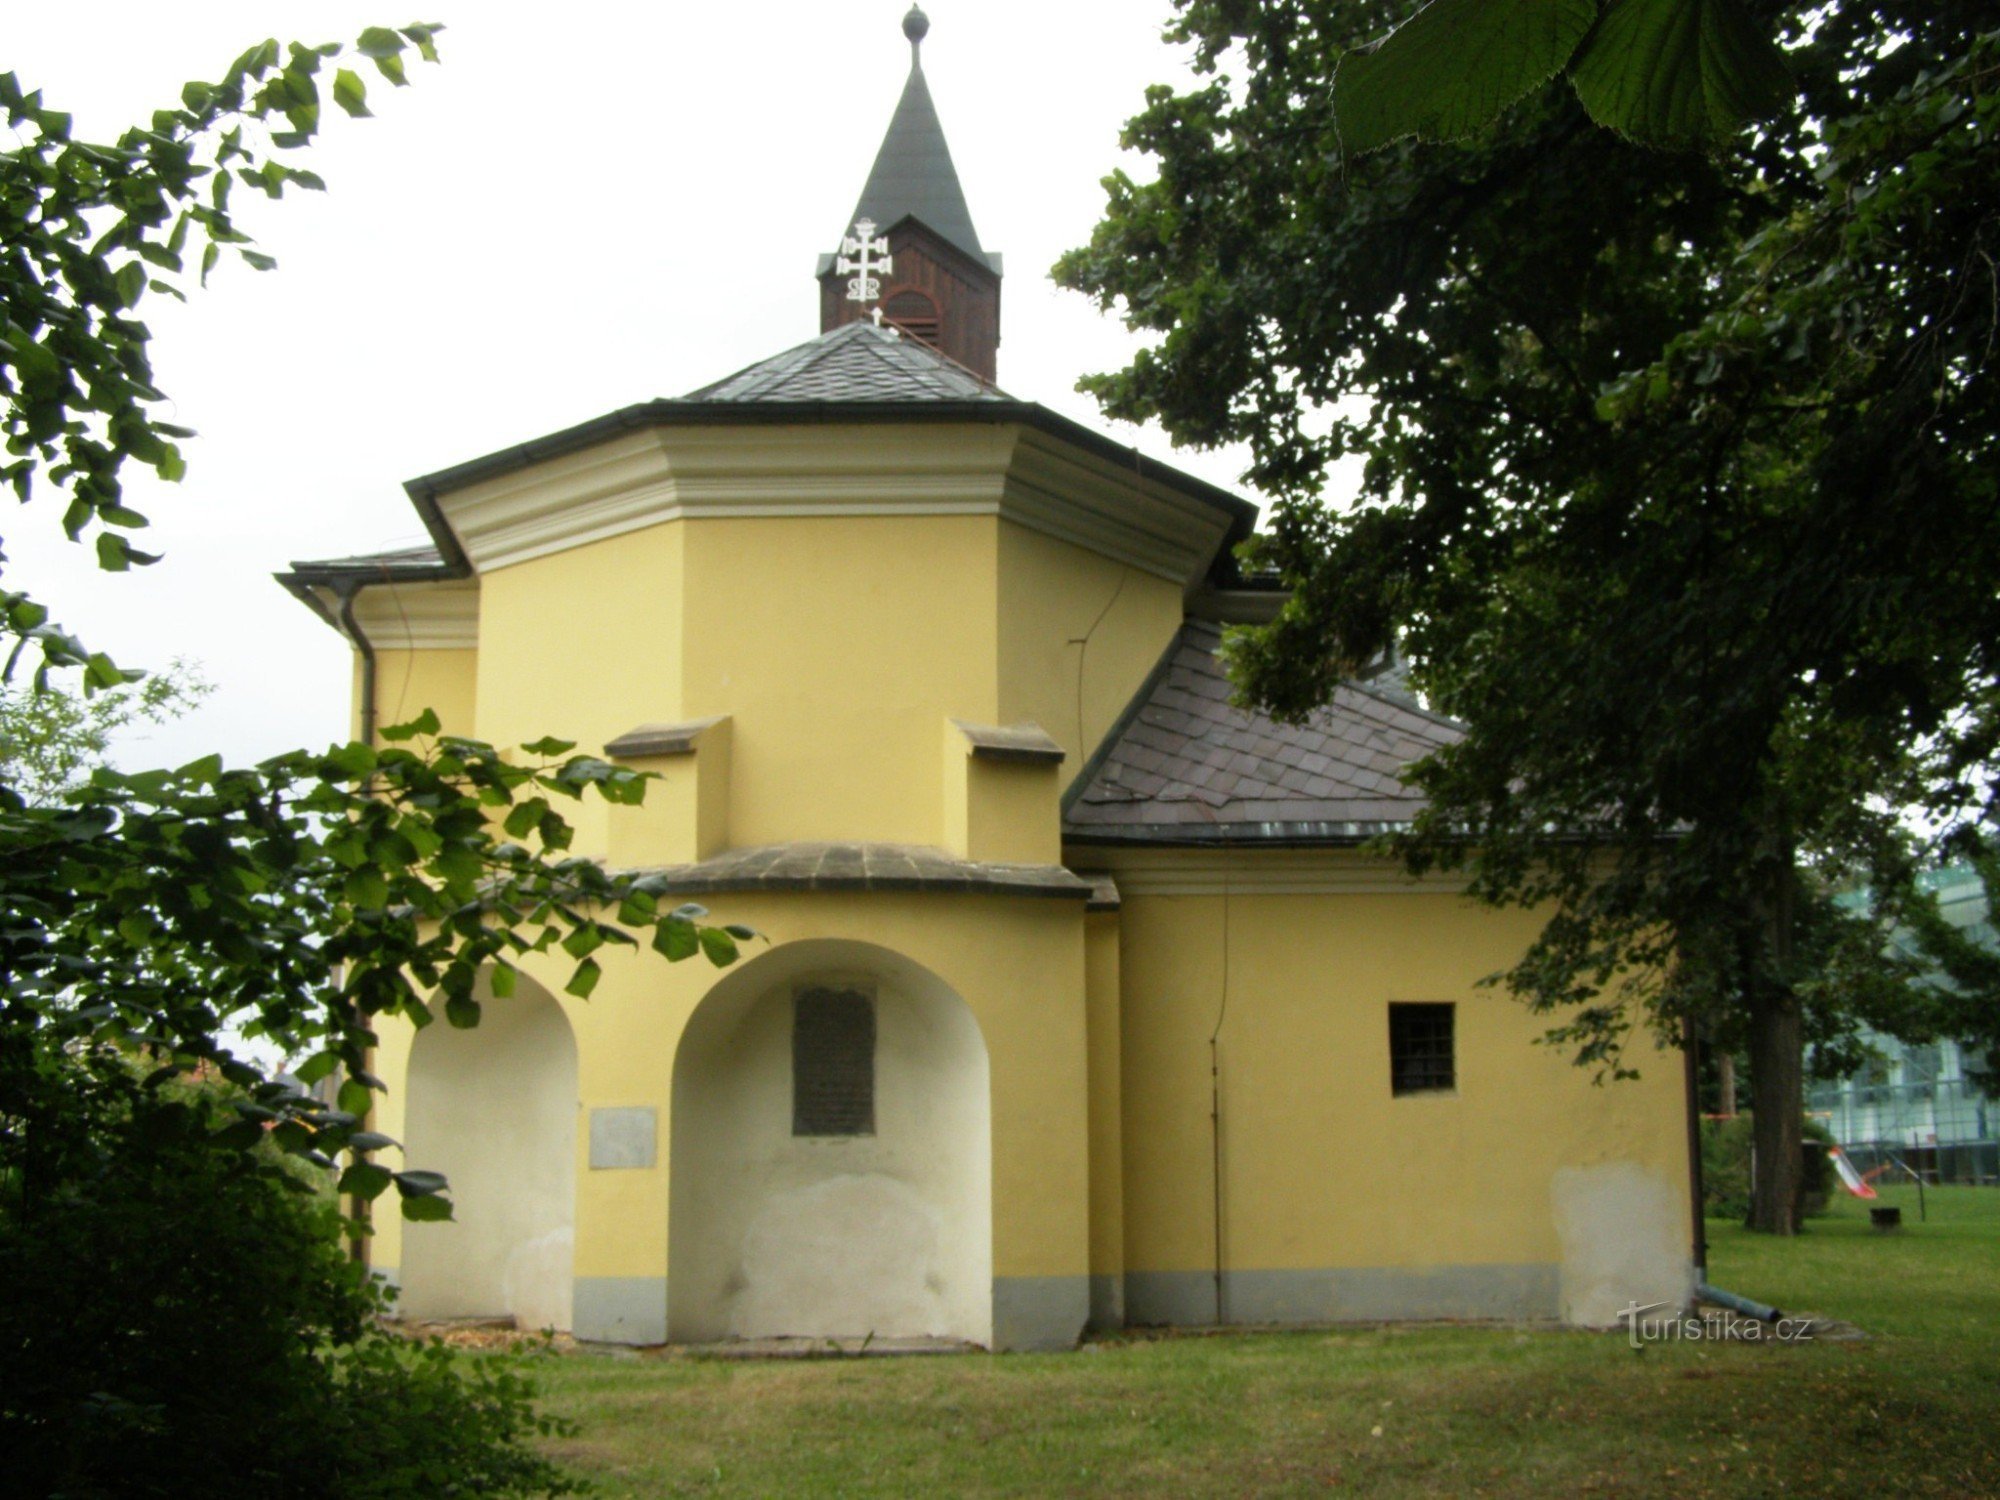 Chlumec nad Cidlinou - Church of the Holy Trinity